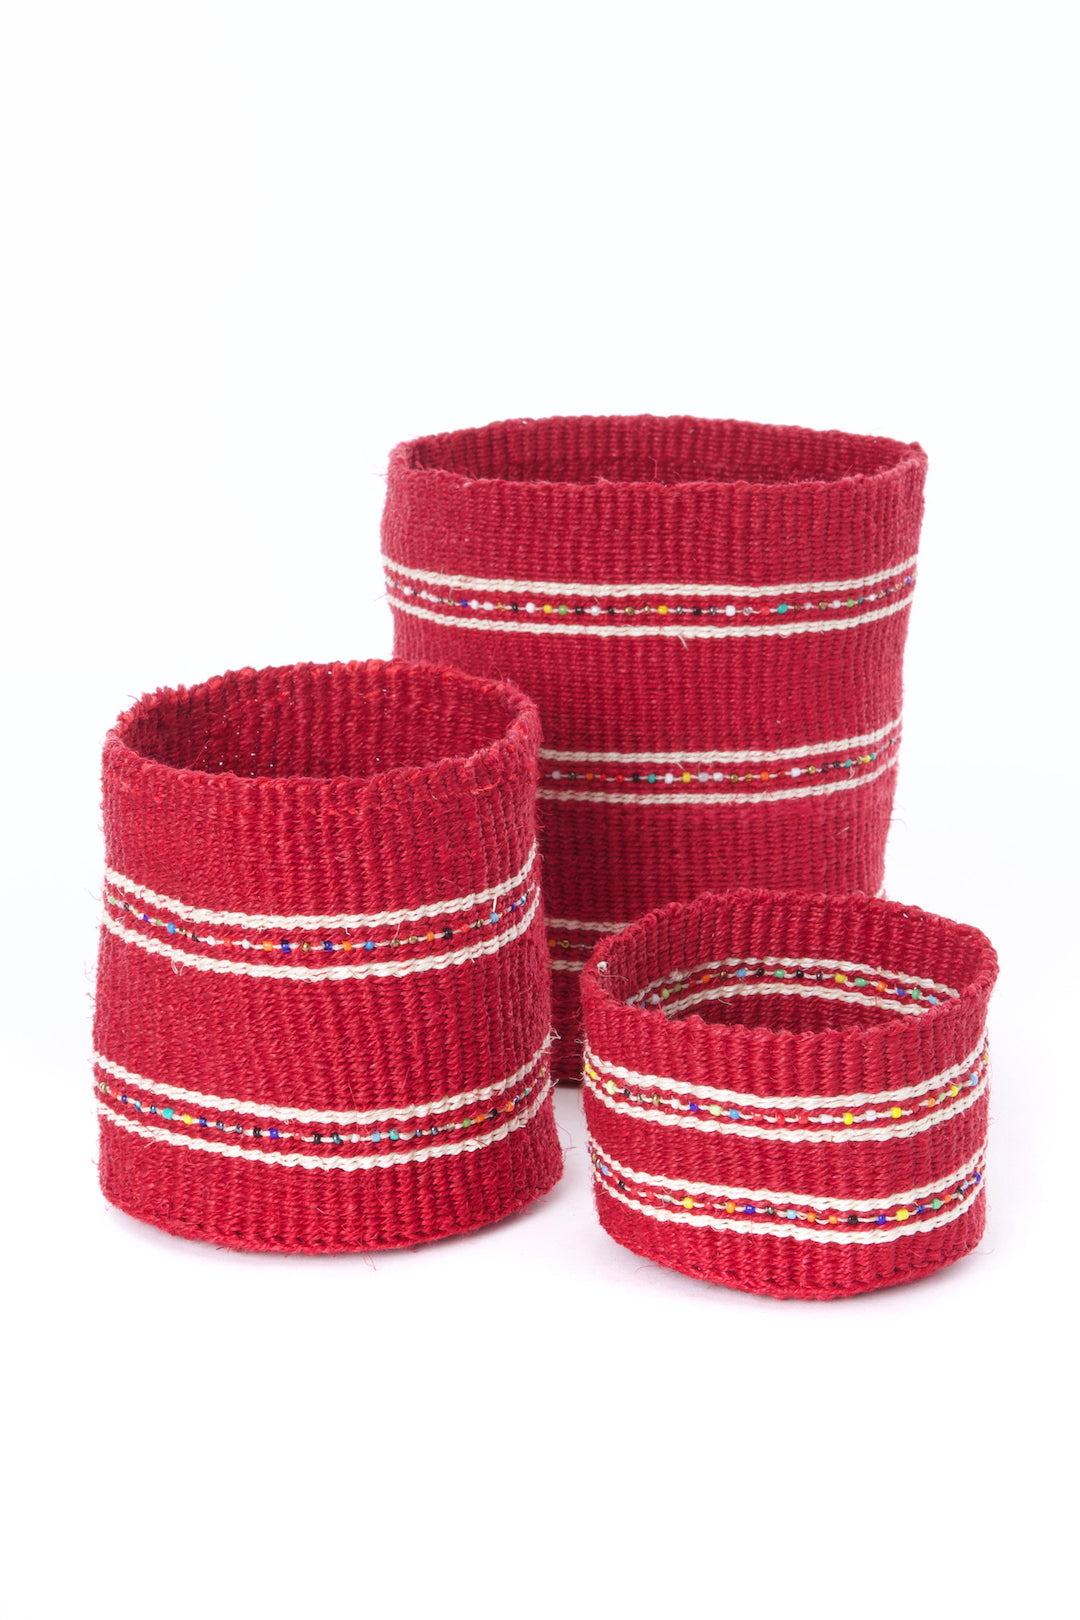 Set/3 Petite Garnet Sisal Baskets with Colorful Beads Default Title